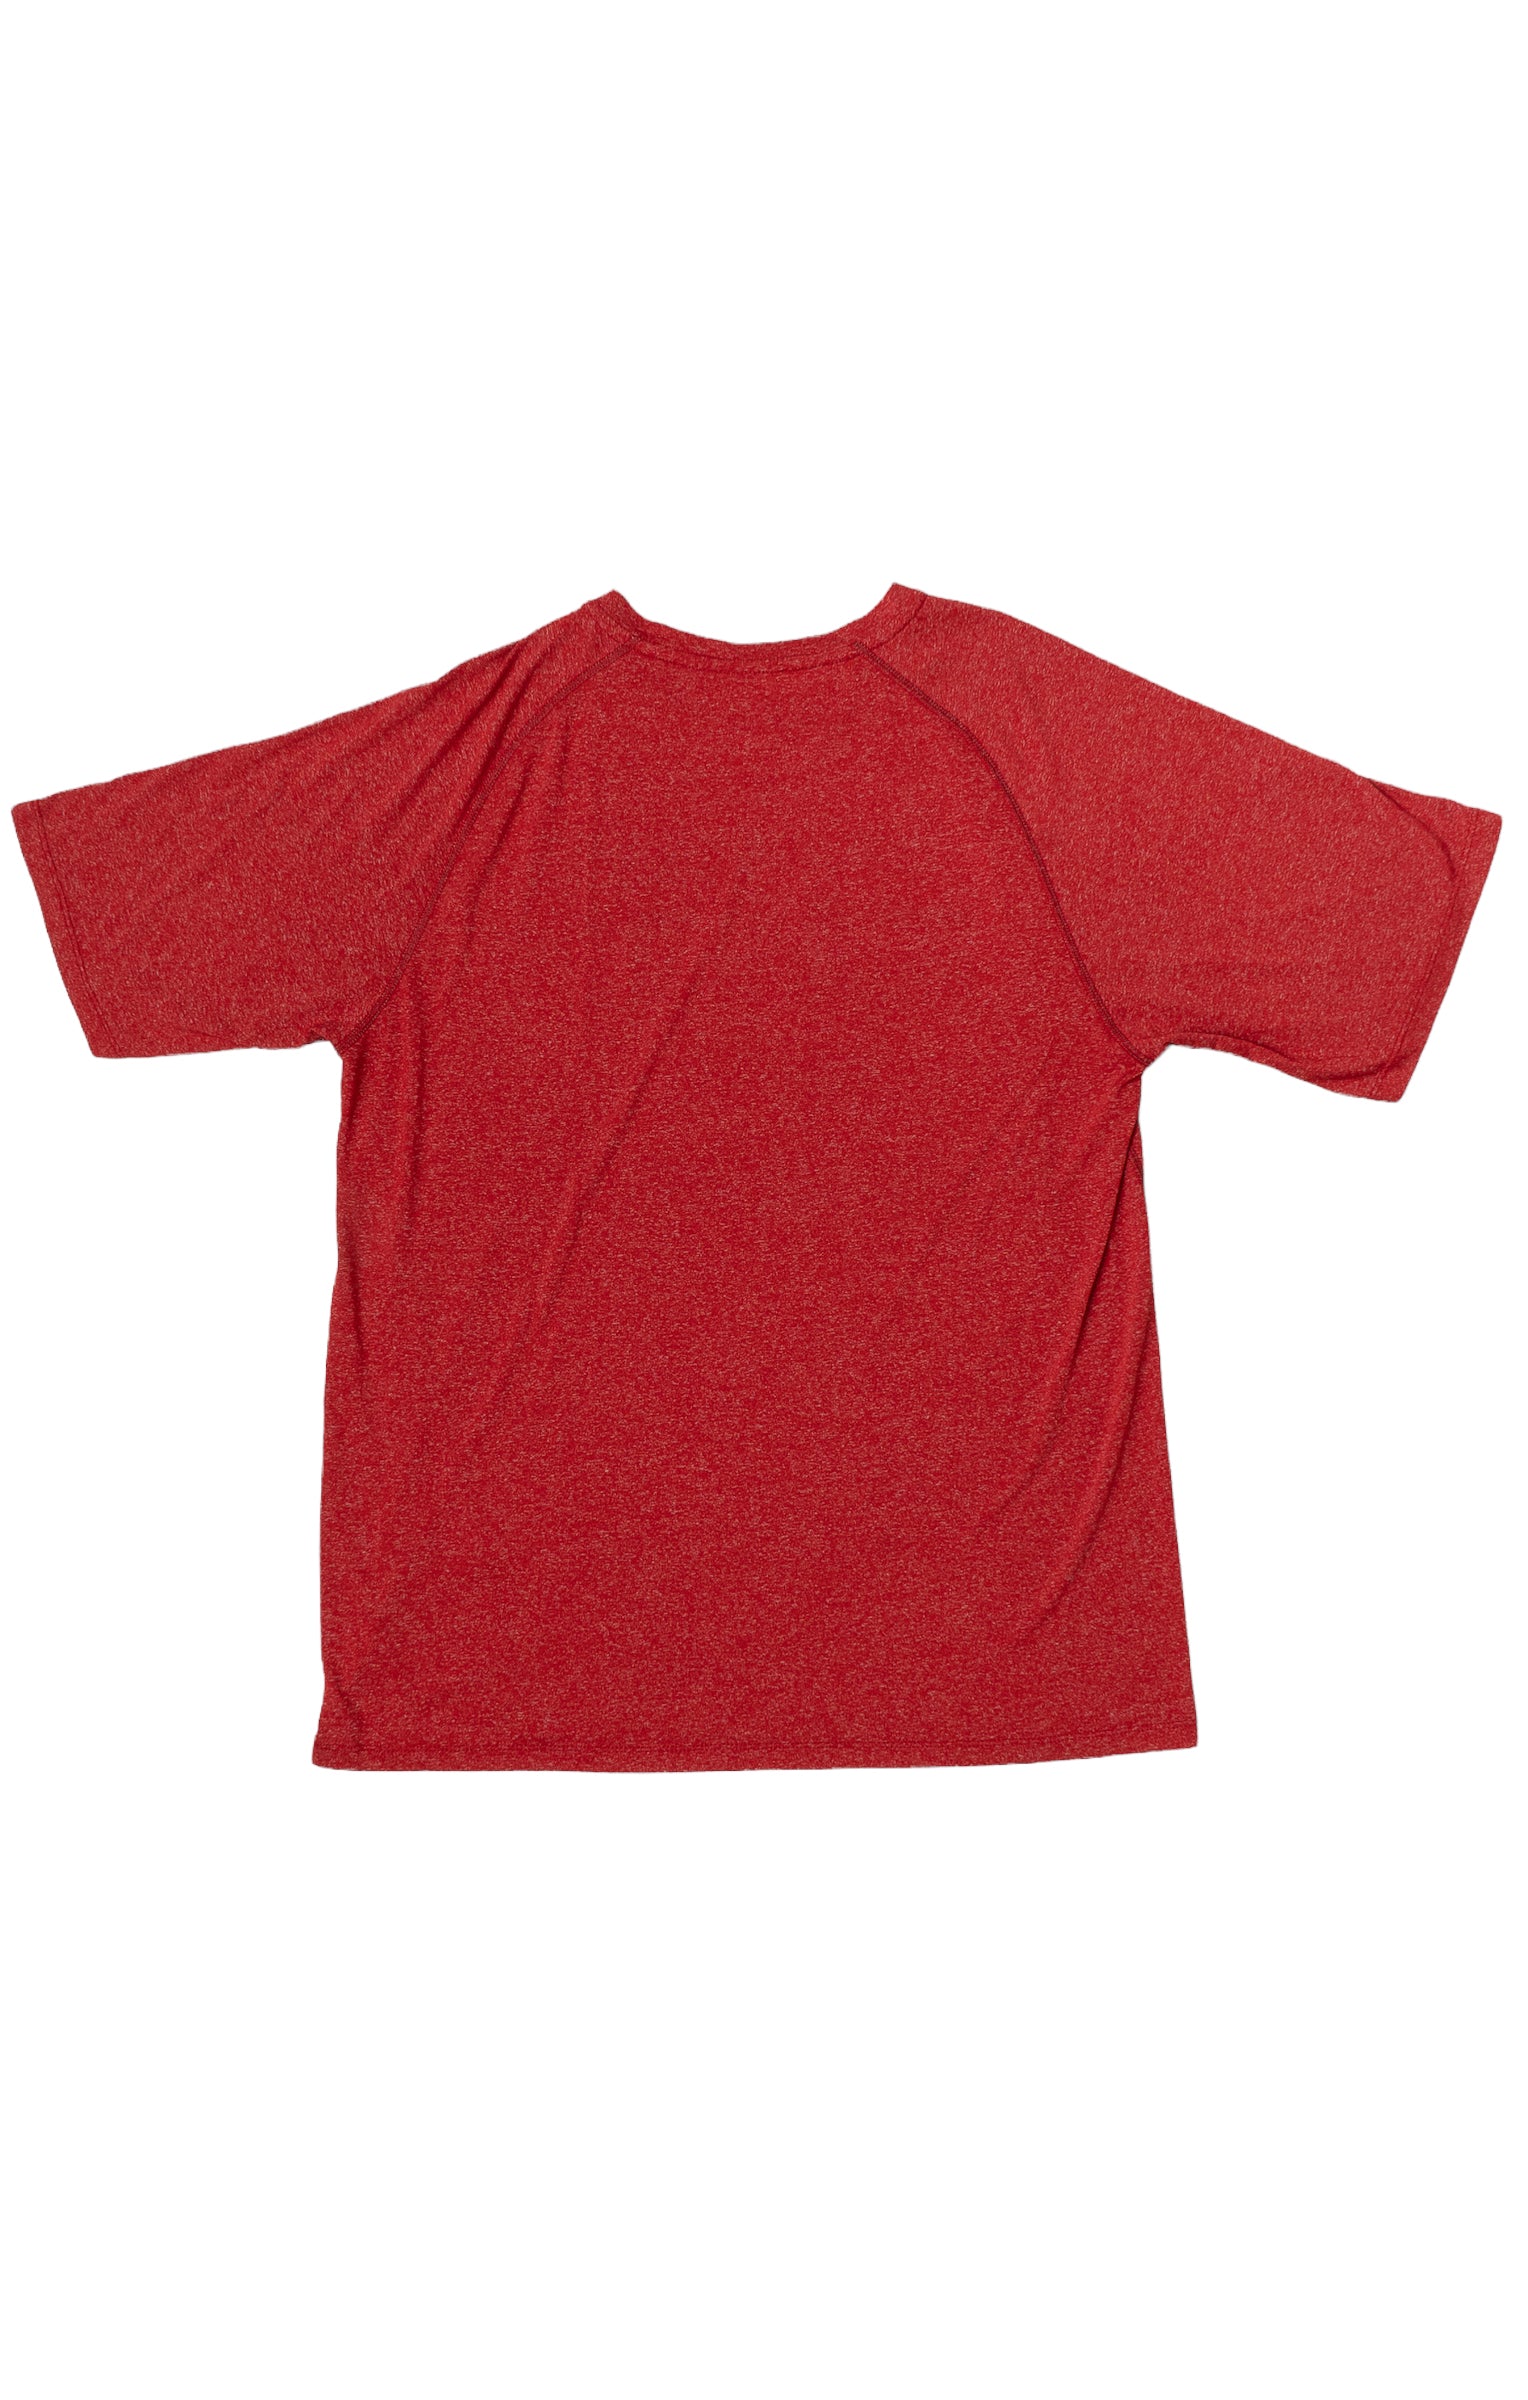 ADIDAS  T-Shirt Size: No size tags; fits like an XL